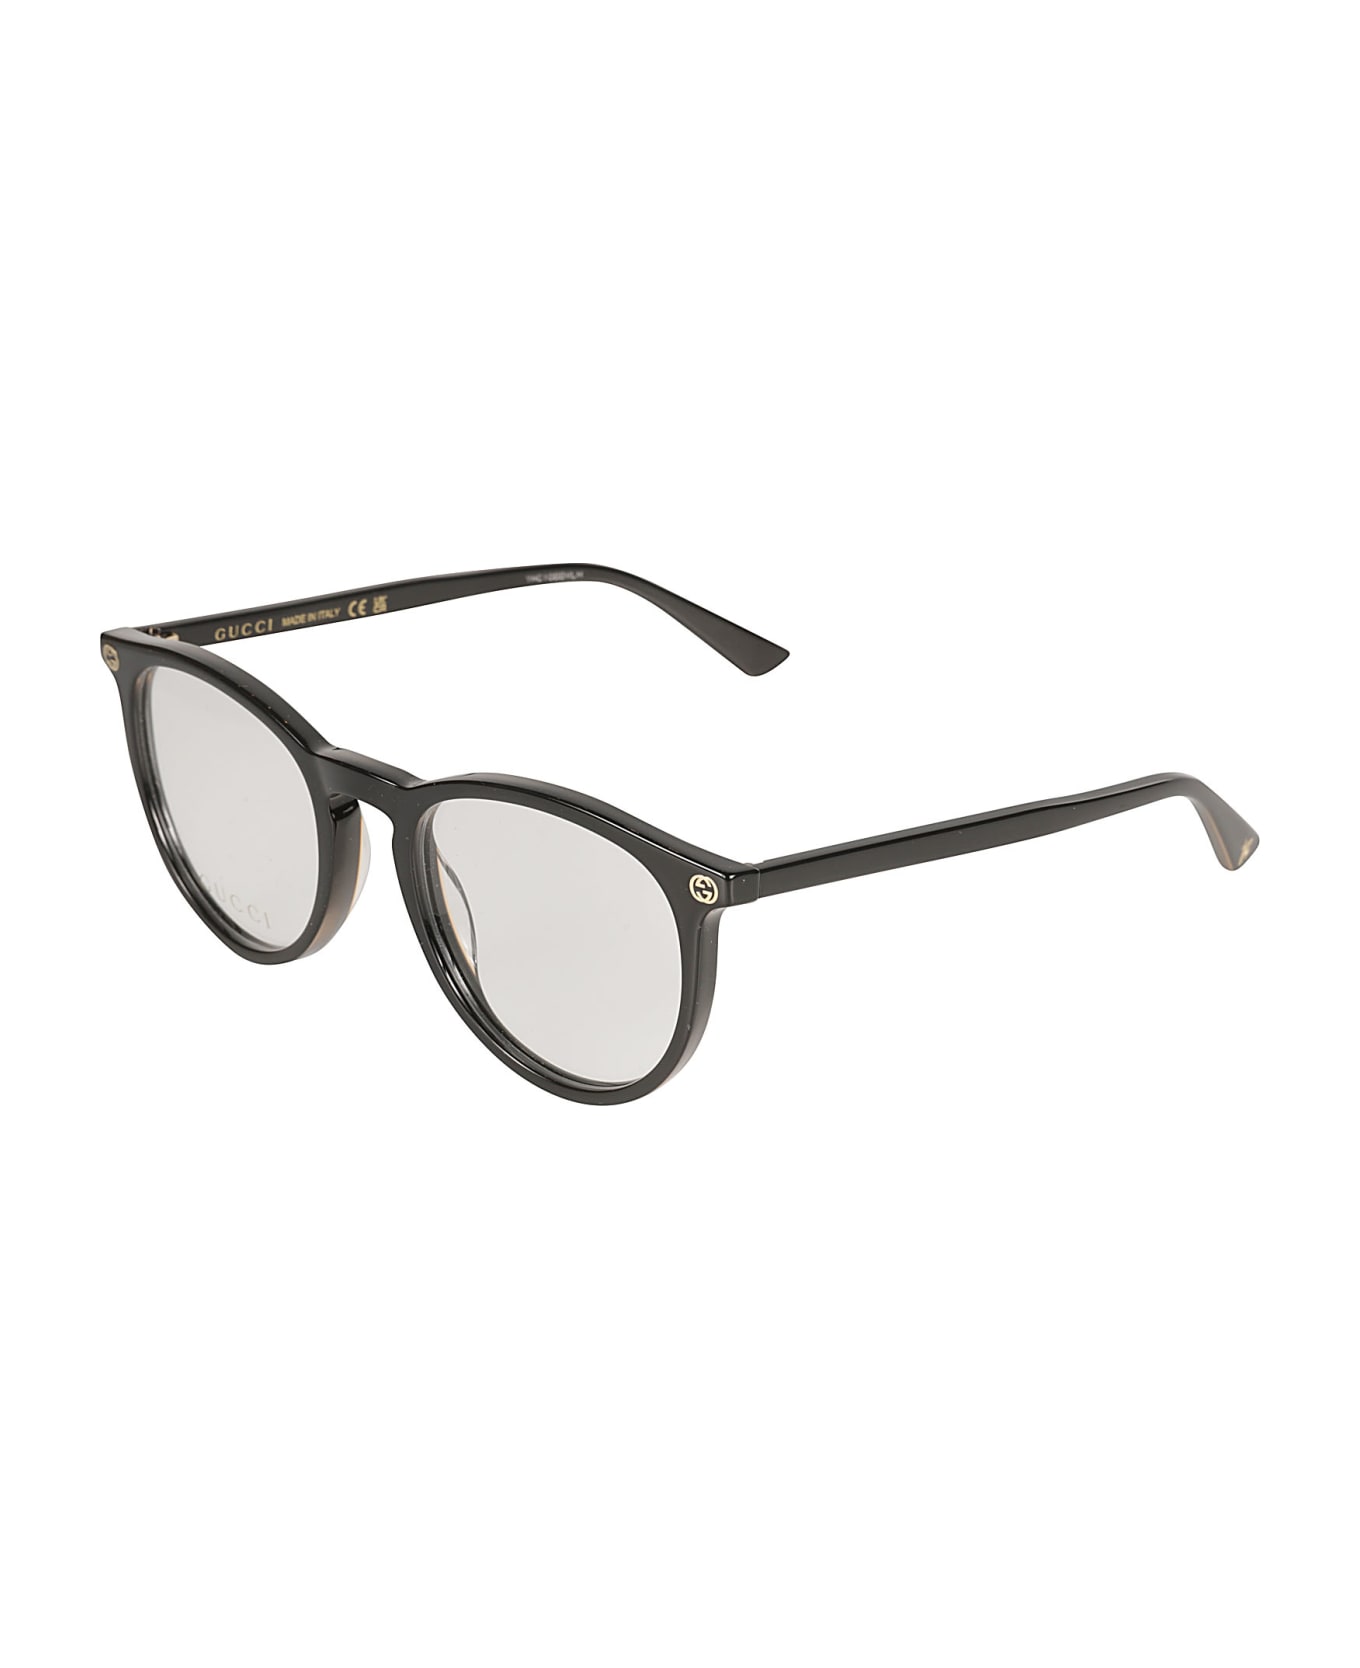 Gucci Eyewear Round Frame Glasses - Black/Transparent アイウェア